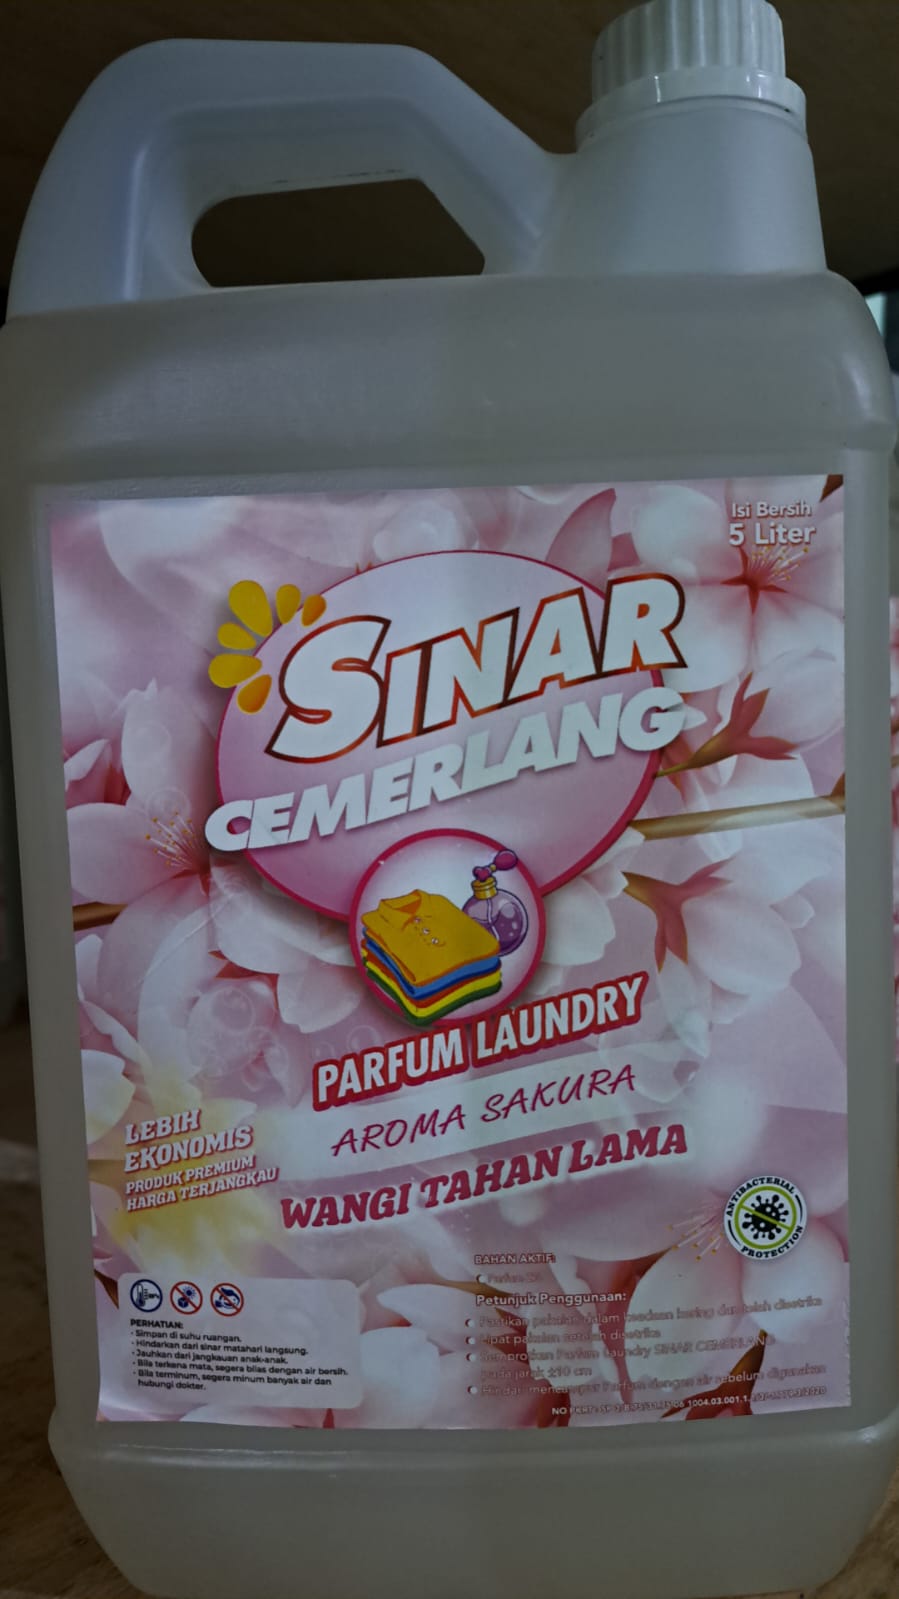 Parfum Laundry Sinar Cemerlang Aroma Sakura 5 Liter